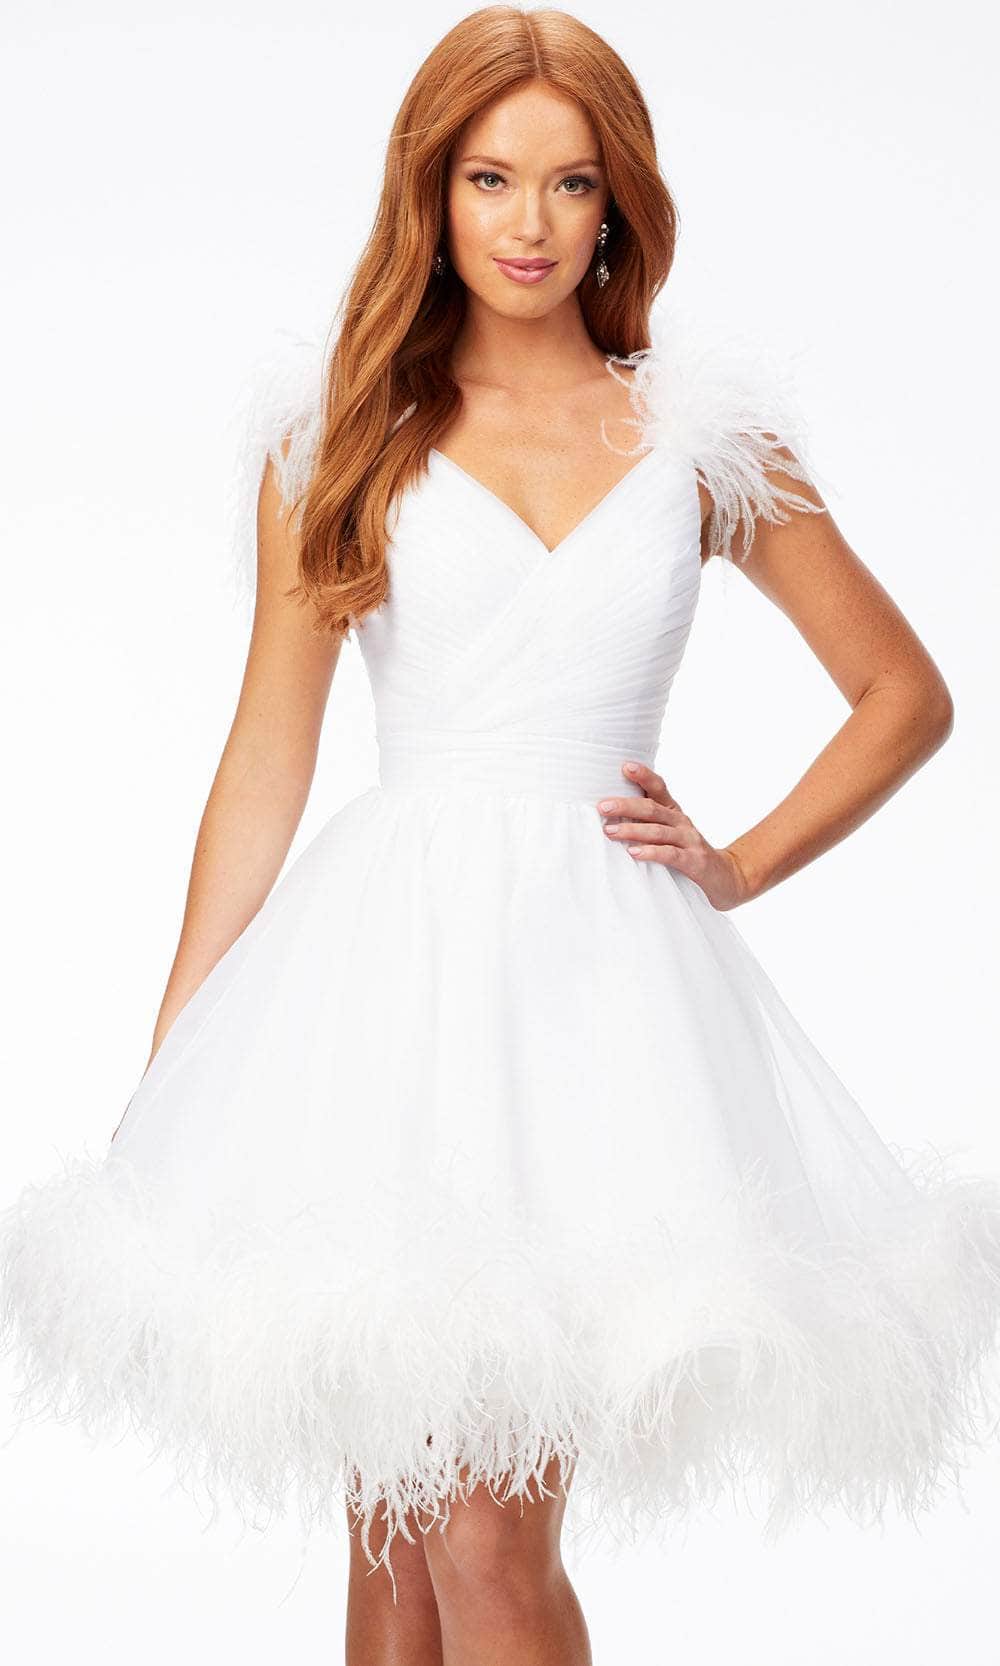 Ashley Lauren 4544 - V-Neck Feathered Cocktail Dress
